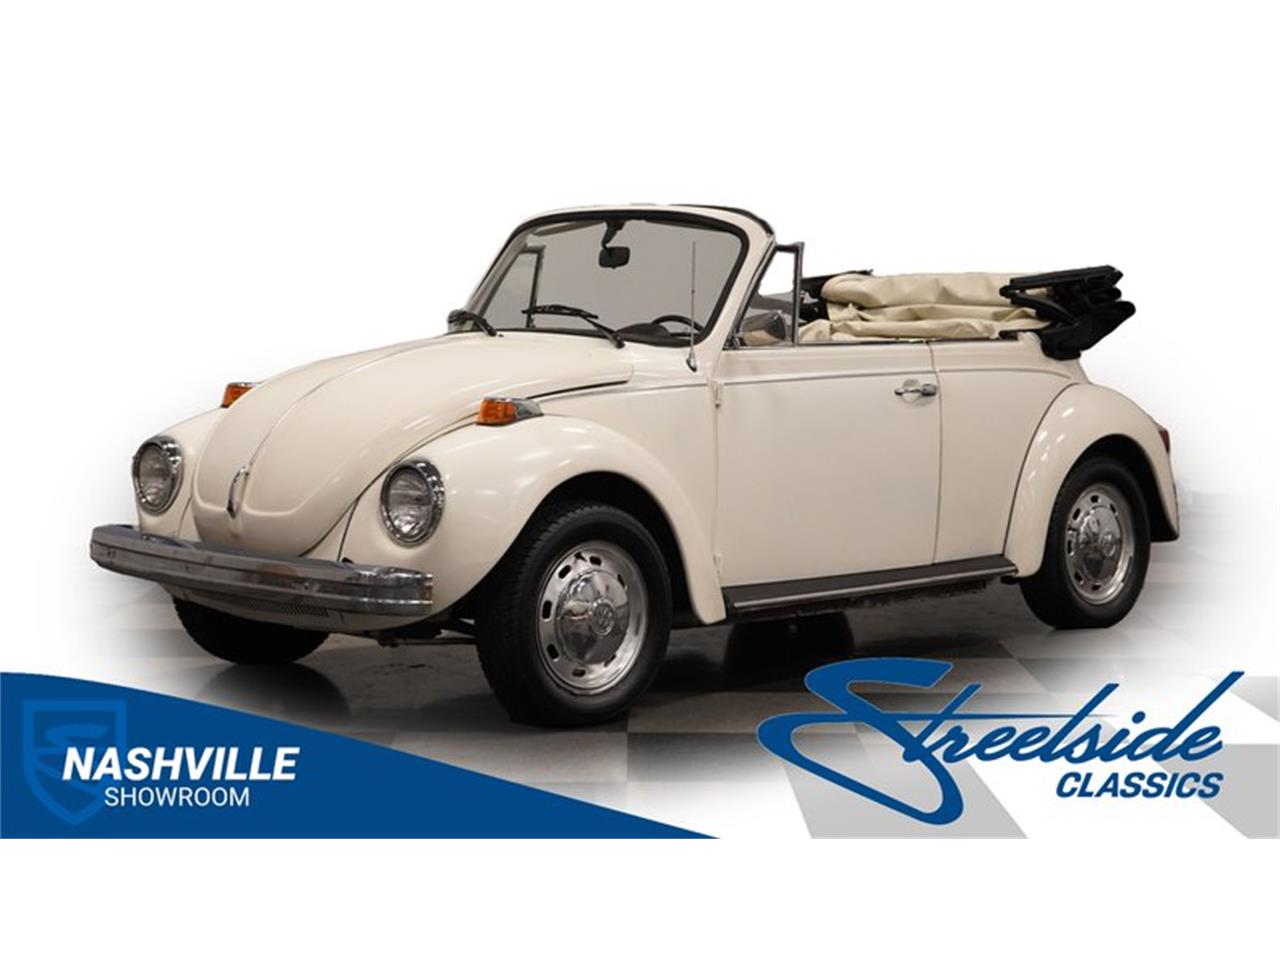 For Sale: 1977 Volkswagen Super Beetle in Lavergne, Tennessee for sale in La Vergne, TN